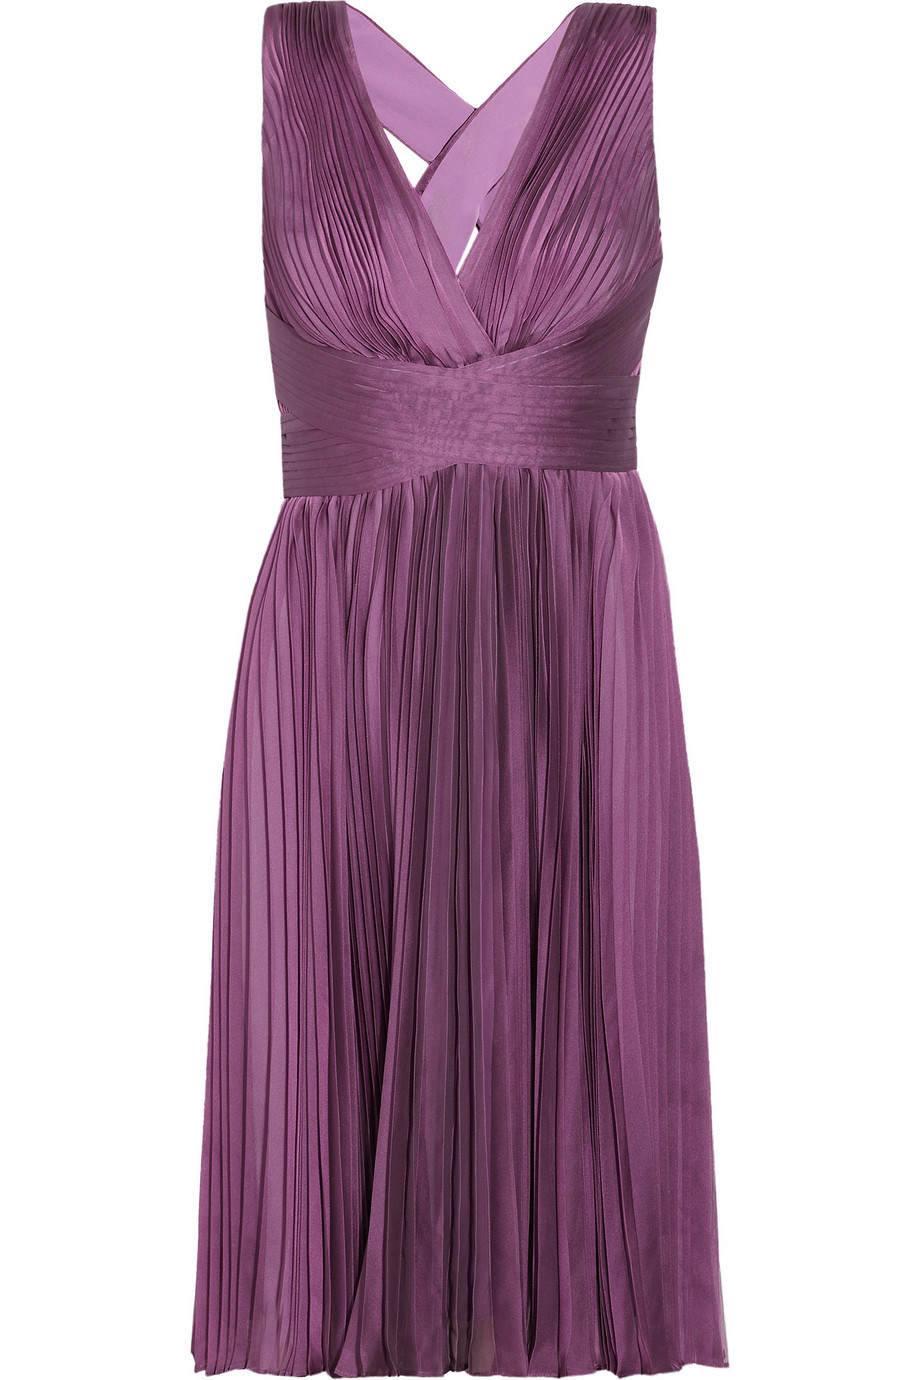 Halston Pleated Chiffon Dress in Purple - Lyst